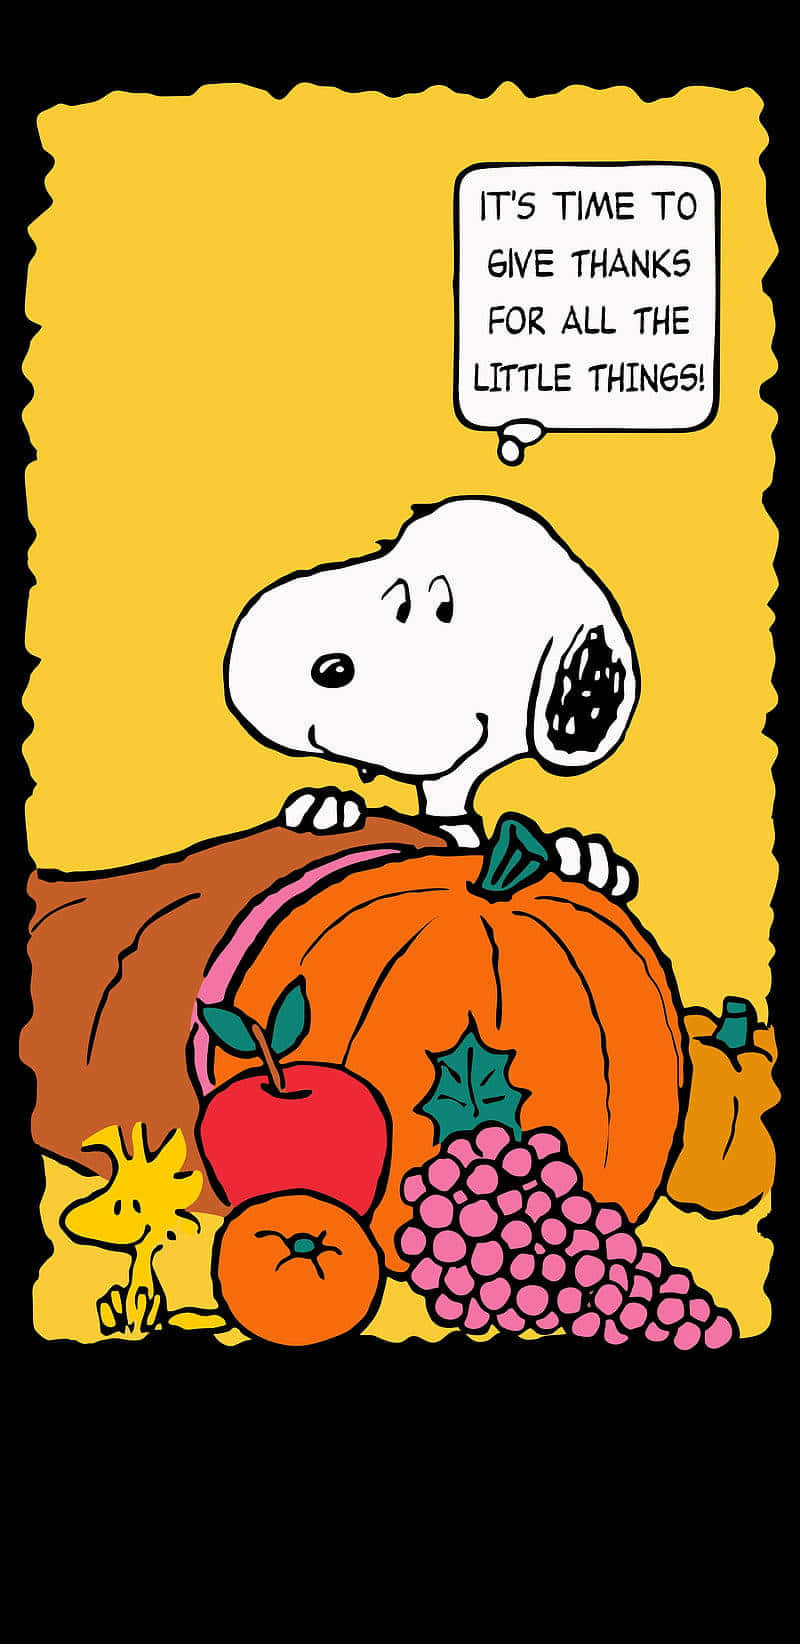 Felizdía De Acción De Gracias De Snoopy Fondo de pantalla